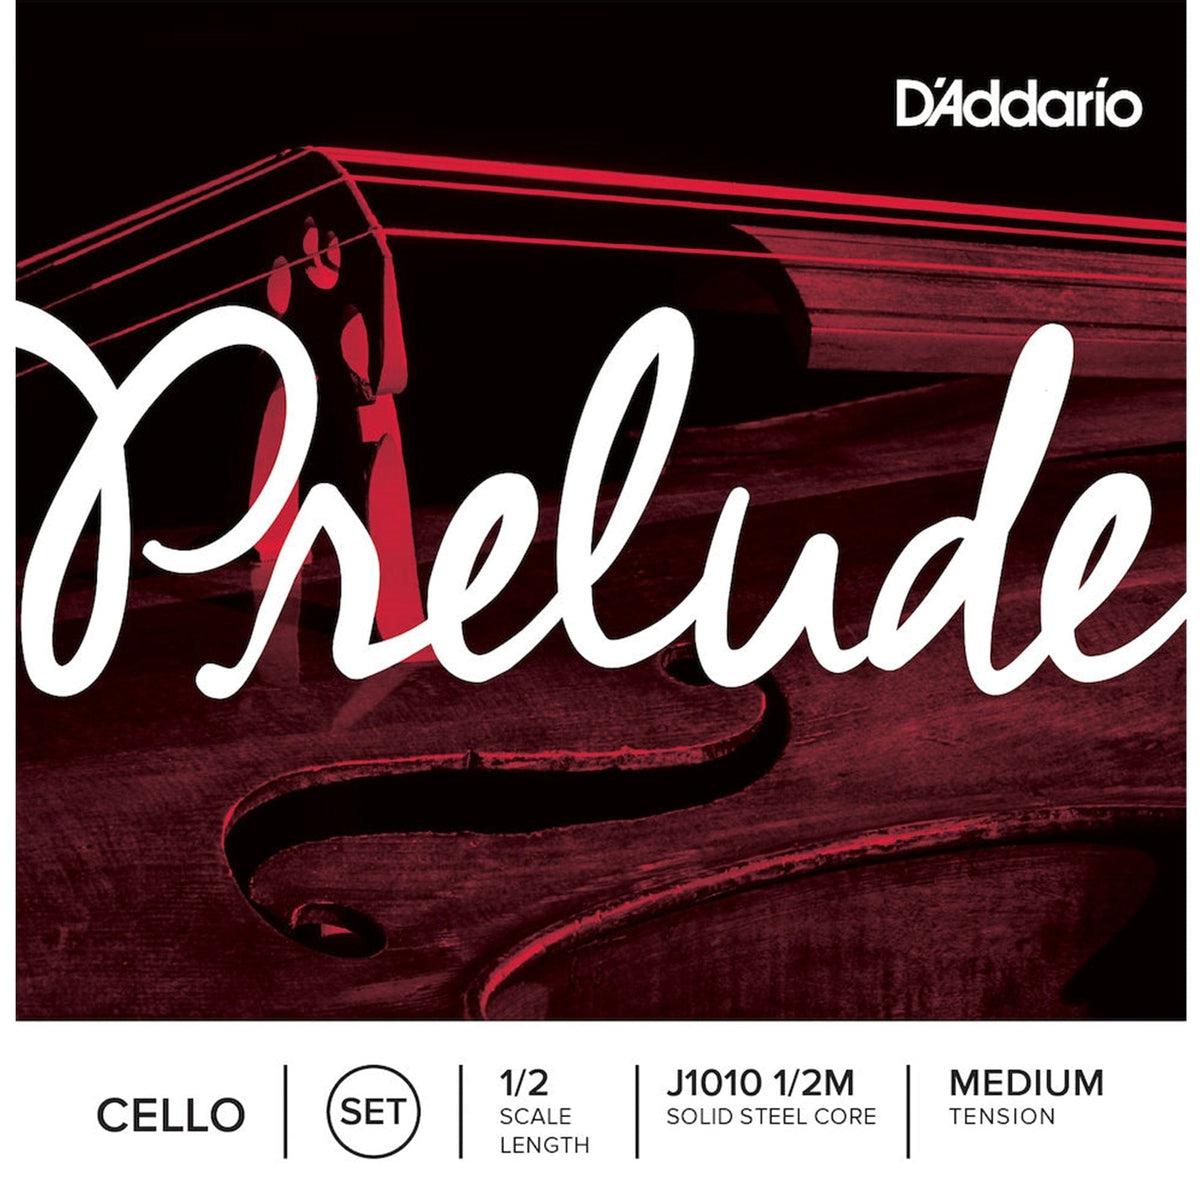 D'Addario Prelude Cello String Set, 1/2 Scale, Medium Tension | J101012M